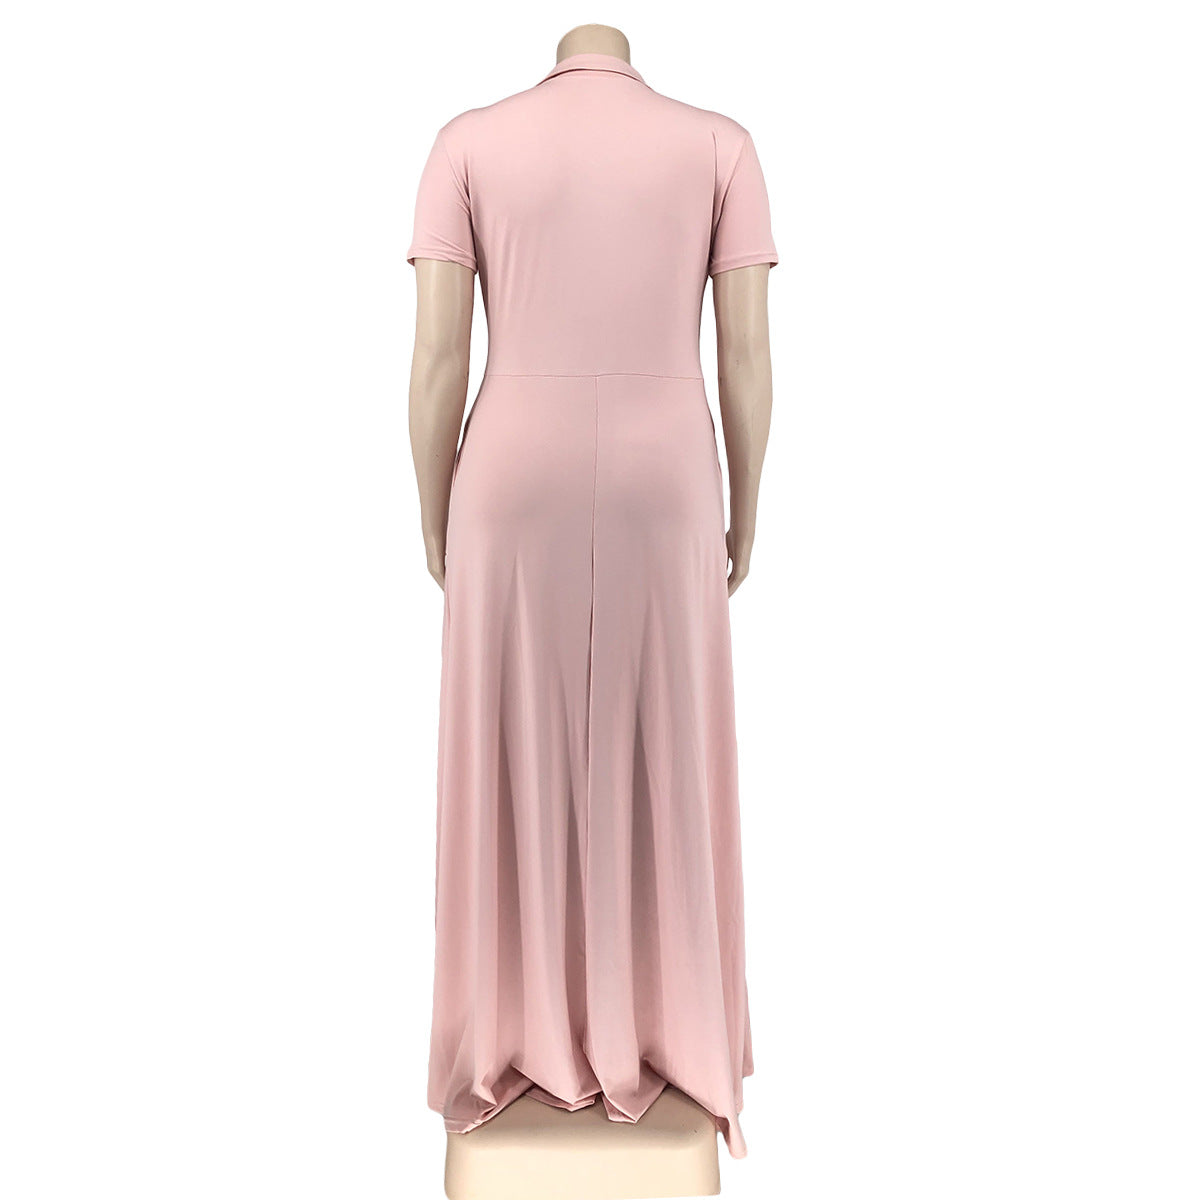 Plus Size Women Casual Fashion V-neck Solid Color long Dress